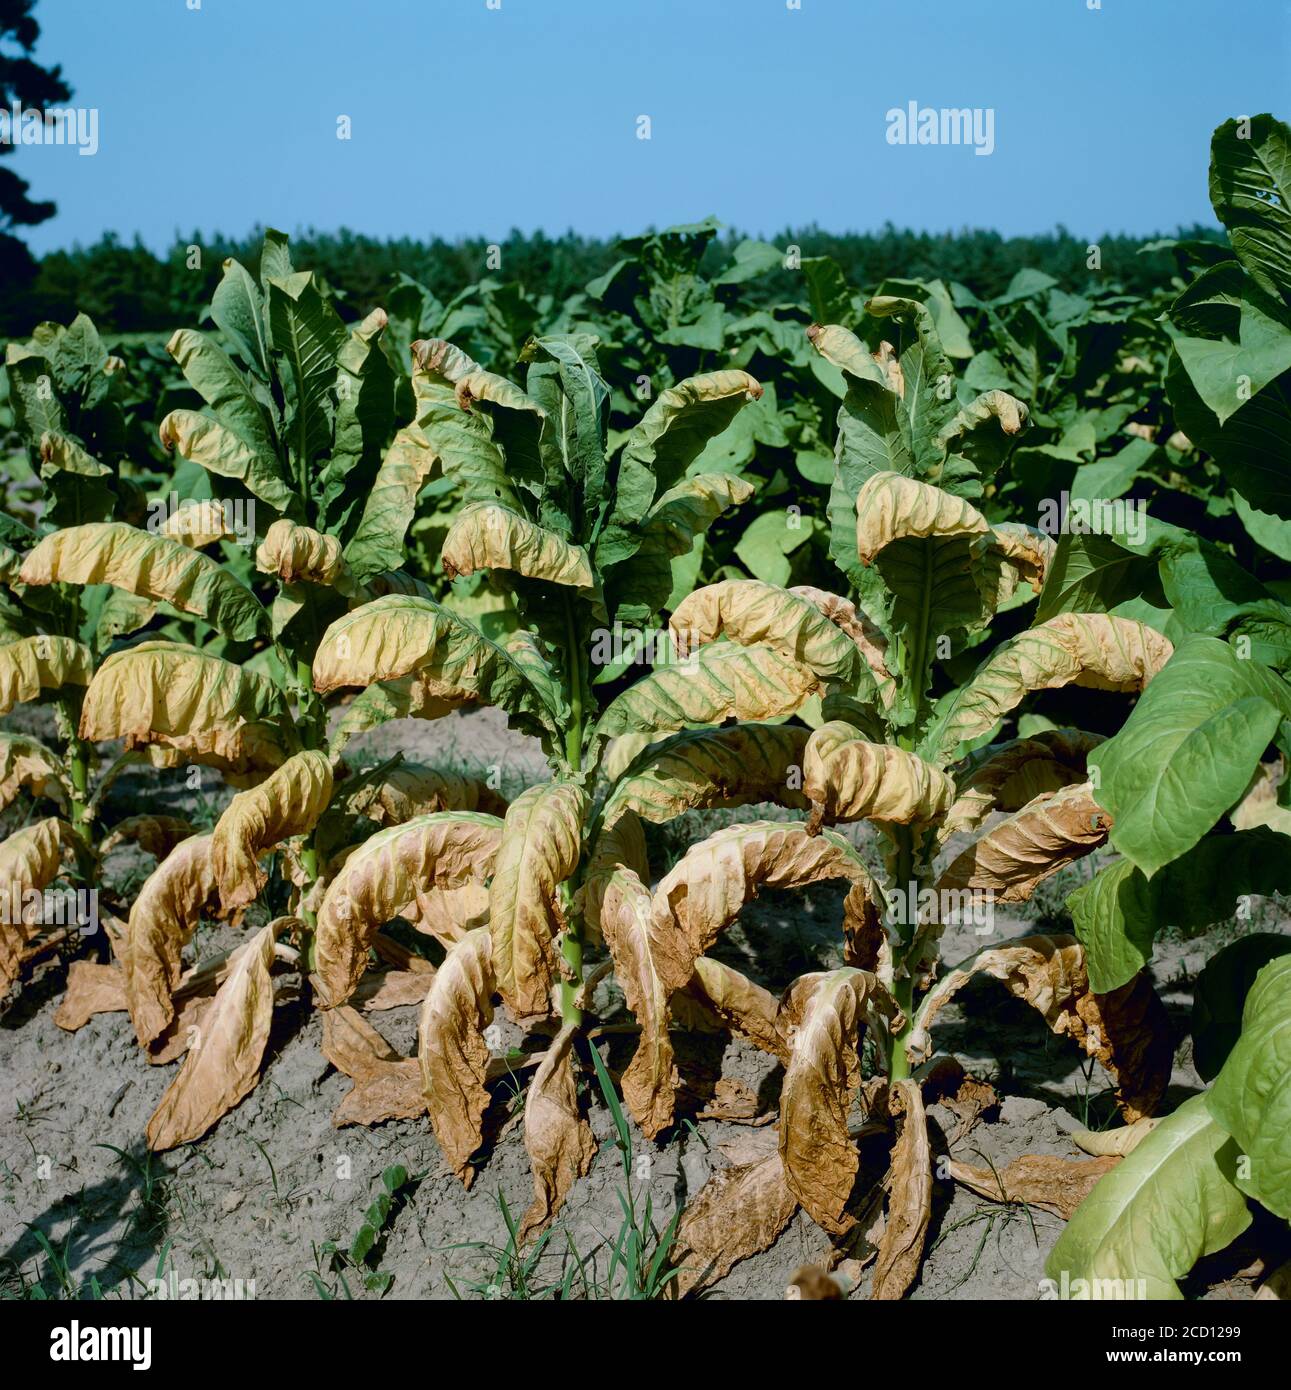 Agriculture - Crop disease, Black shank symptoms on flue cured tobacco plants / North Carolina, USA. Stock Photo